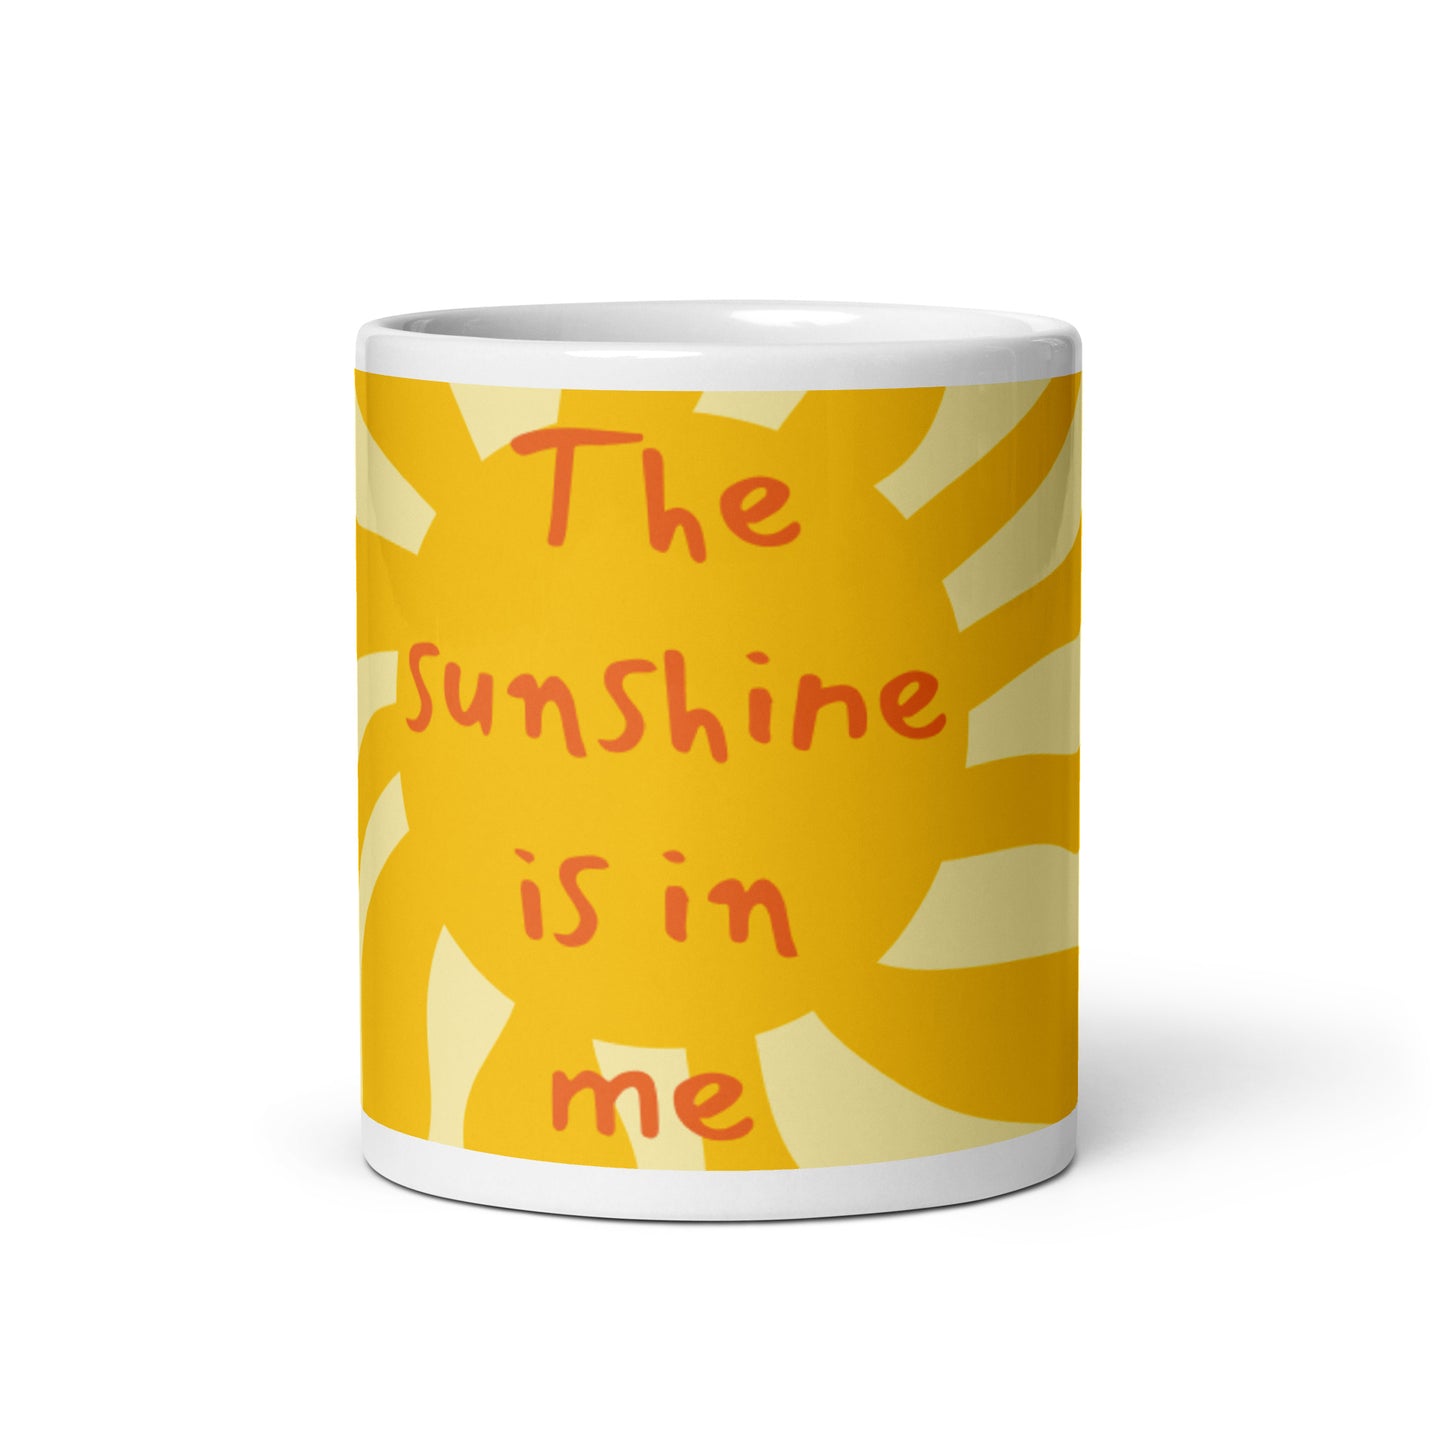 Sunshine White Glossy Mug - The sunshine is in me